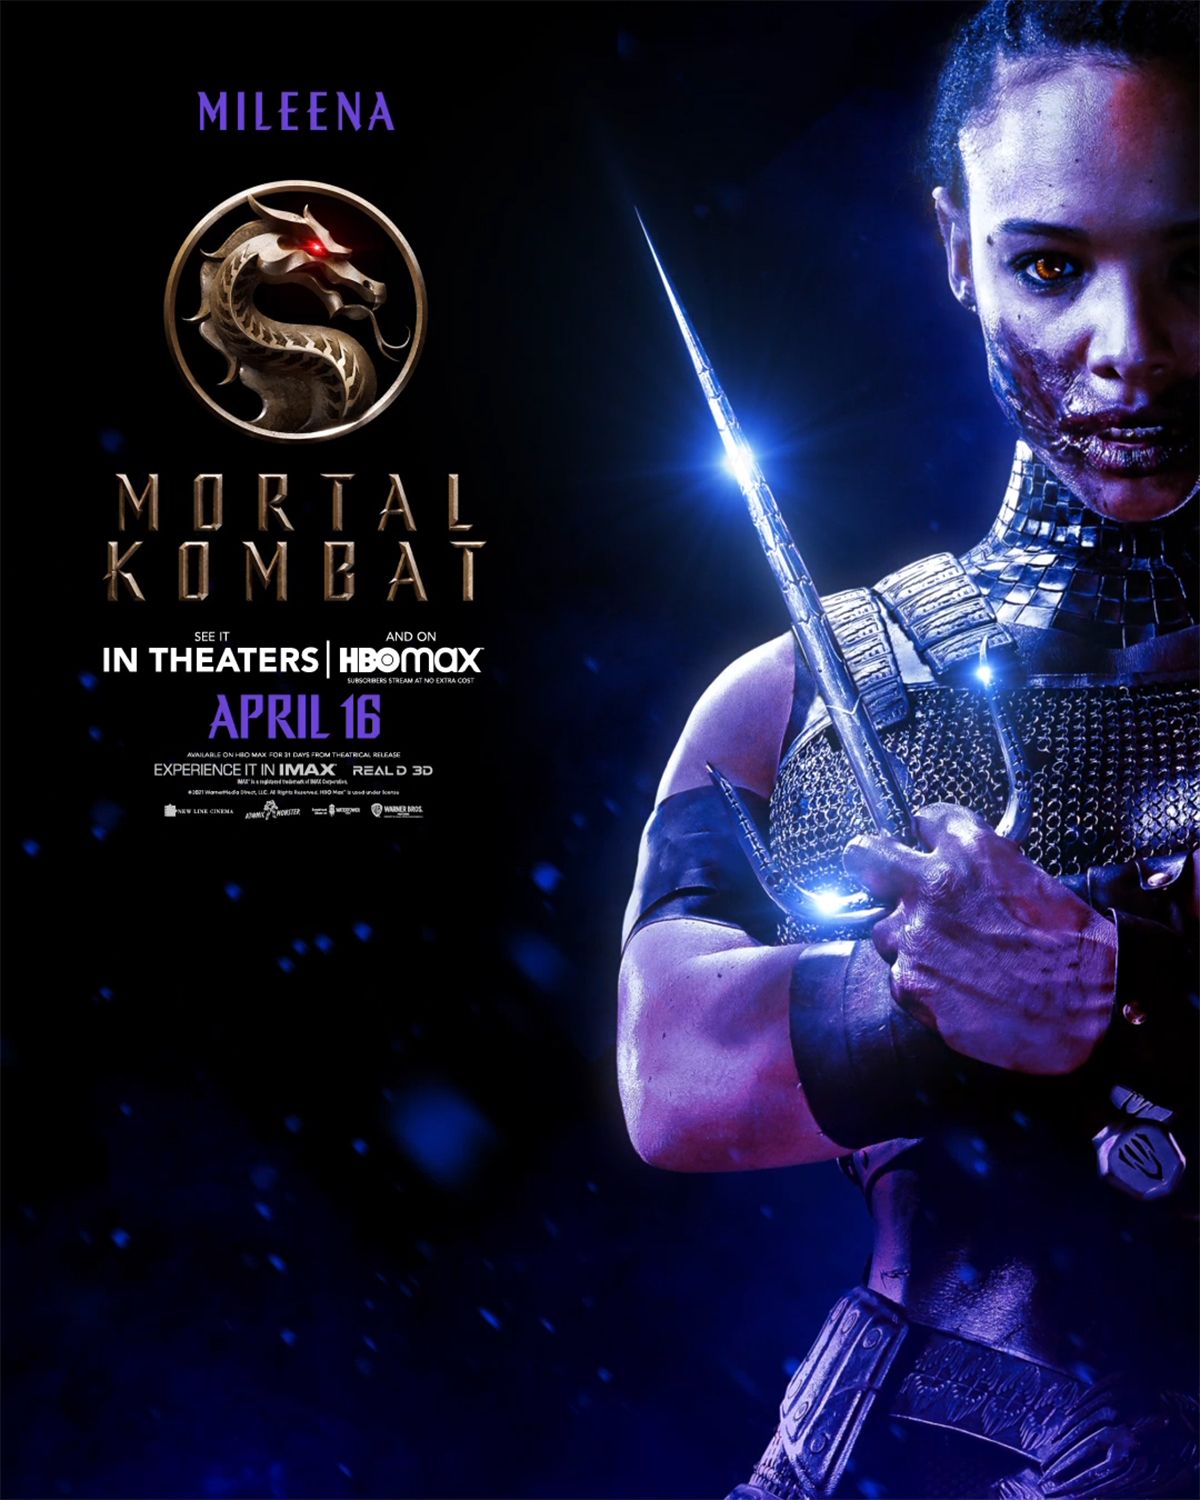 Mileena character poster for Mortal Kombat movie